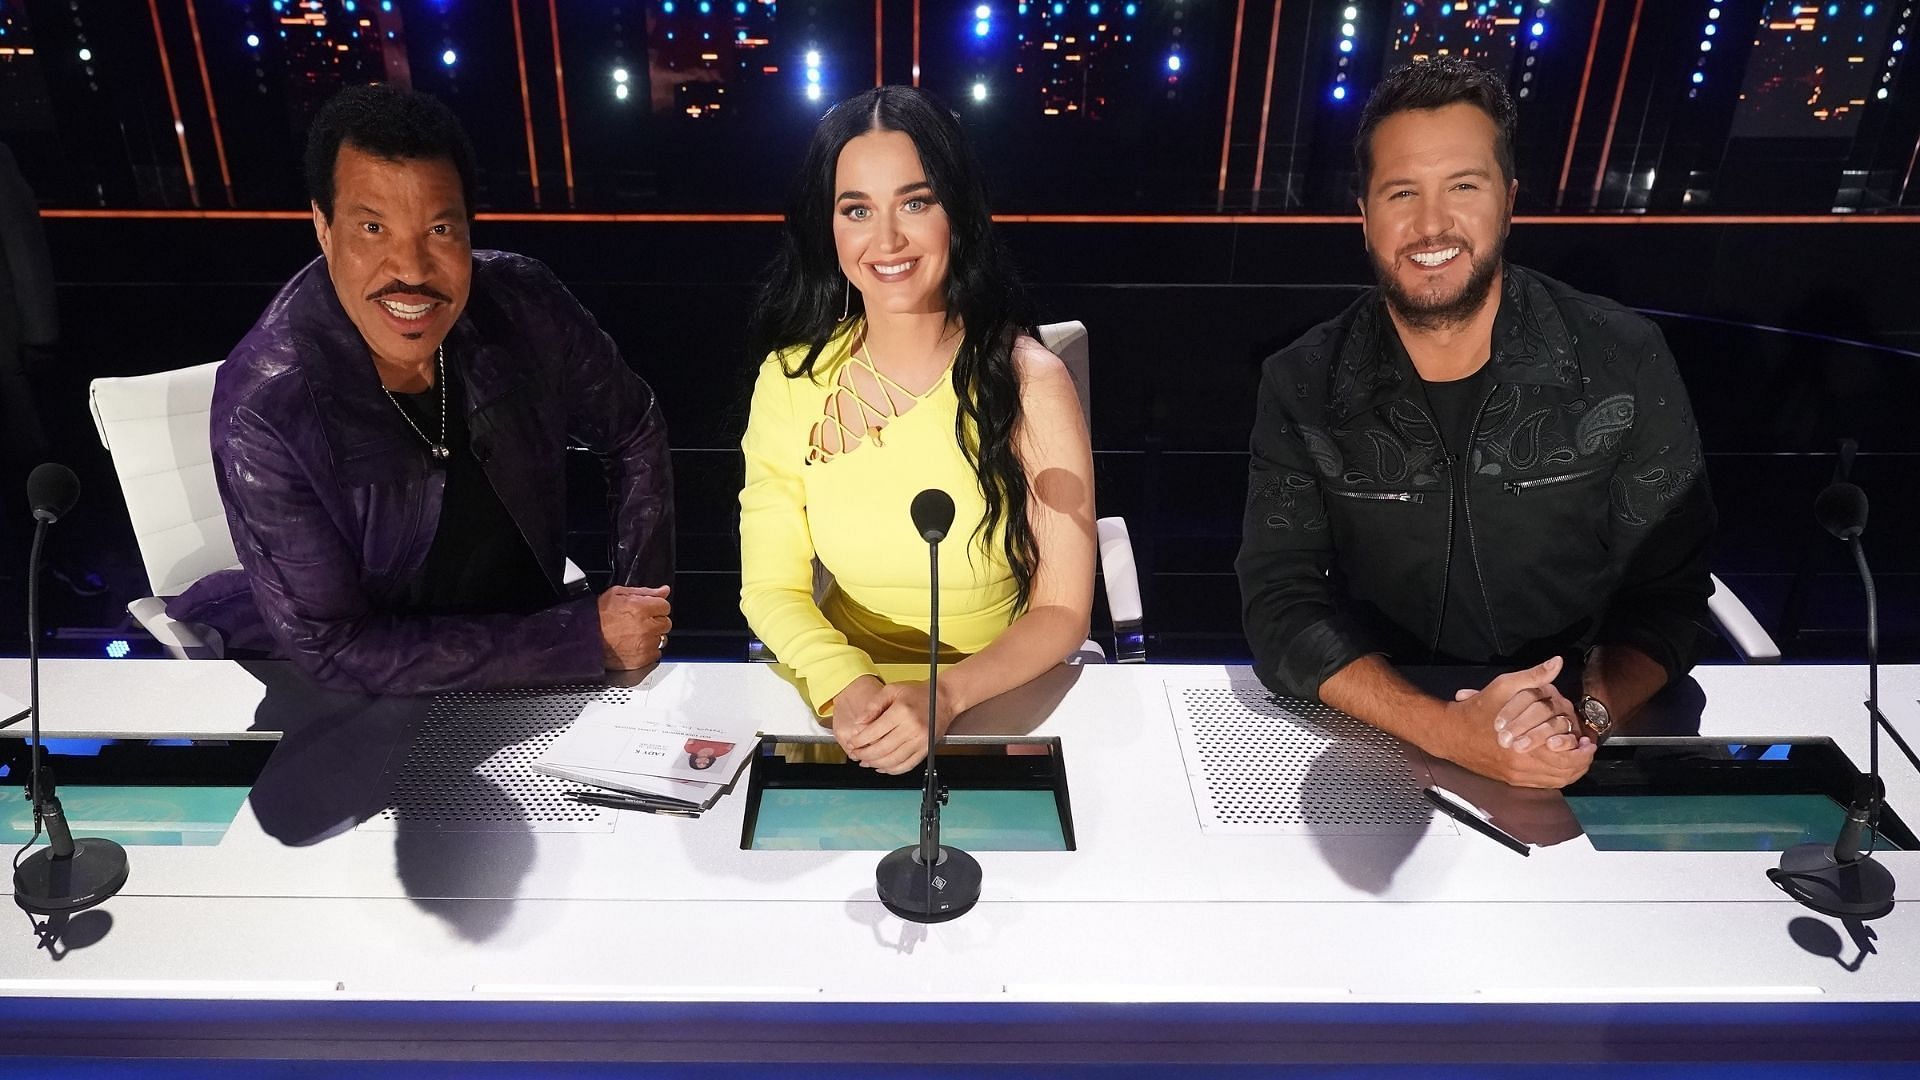 "Judges do more harm than good" Fans criticize American Idol judges